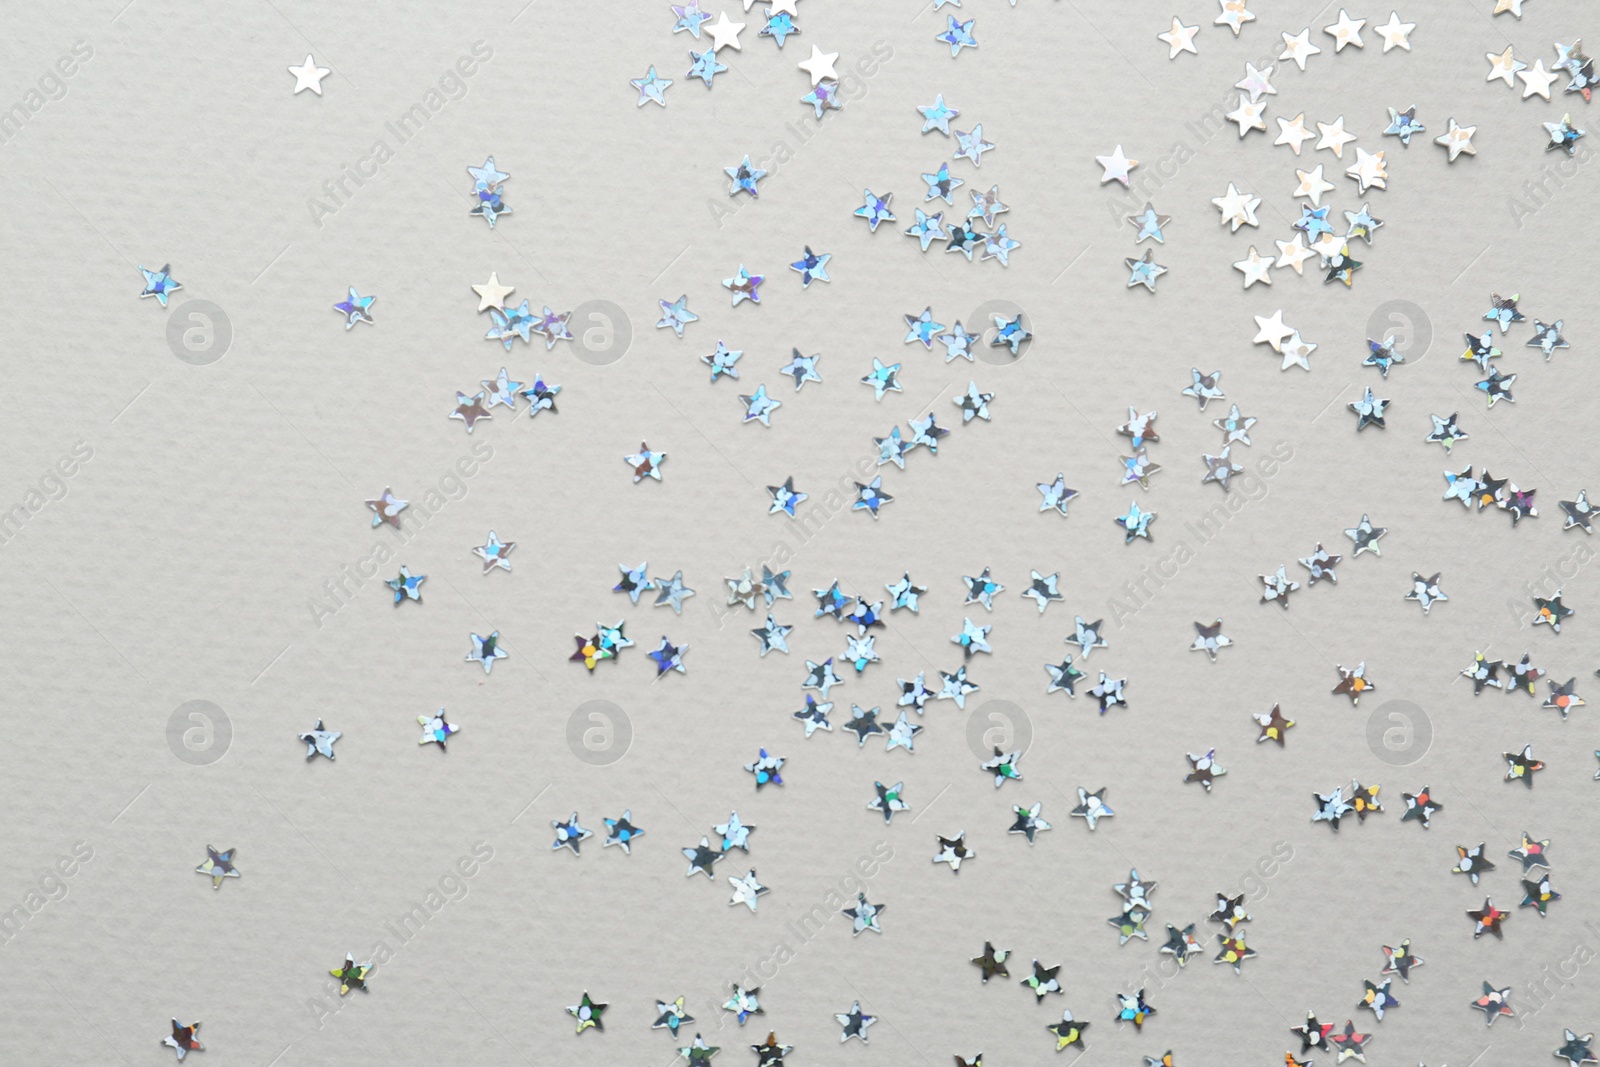 Photo of Confetti stars on grey background, flat lay Christmas celebration